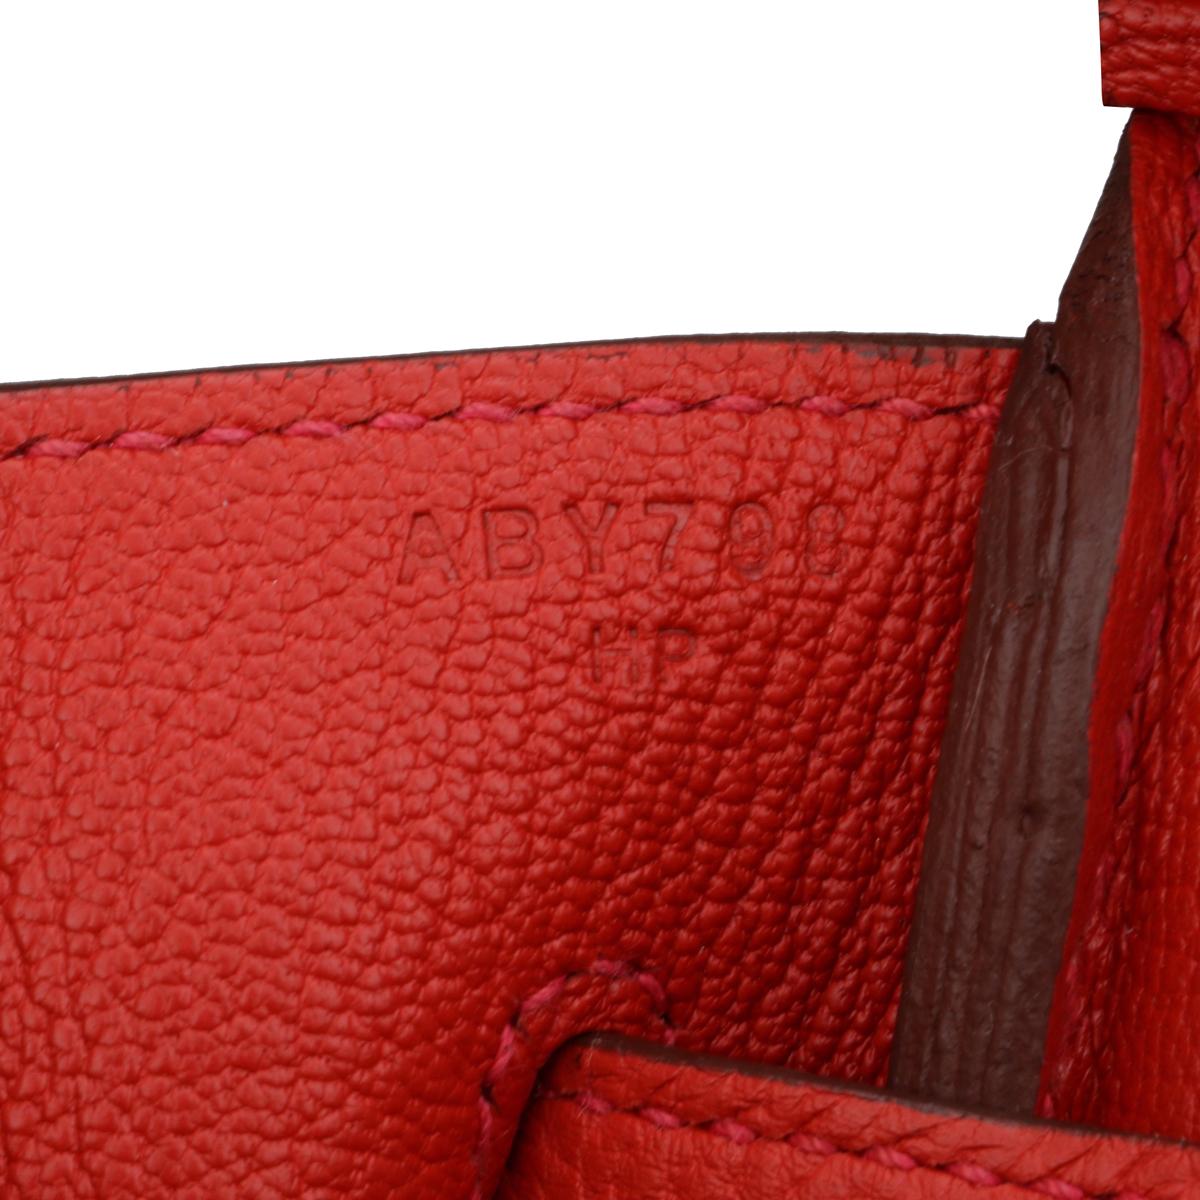 Hermès Birkin Bag 35cm Geranium Togo Leather with Gold Hardware Stamp A 2017 14